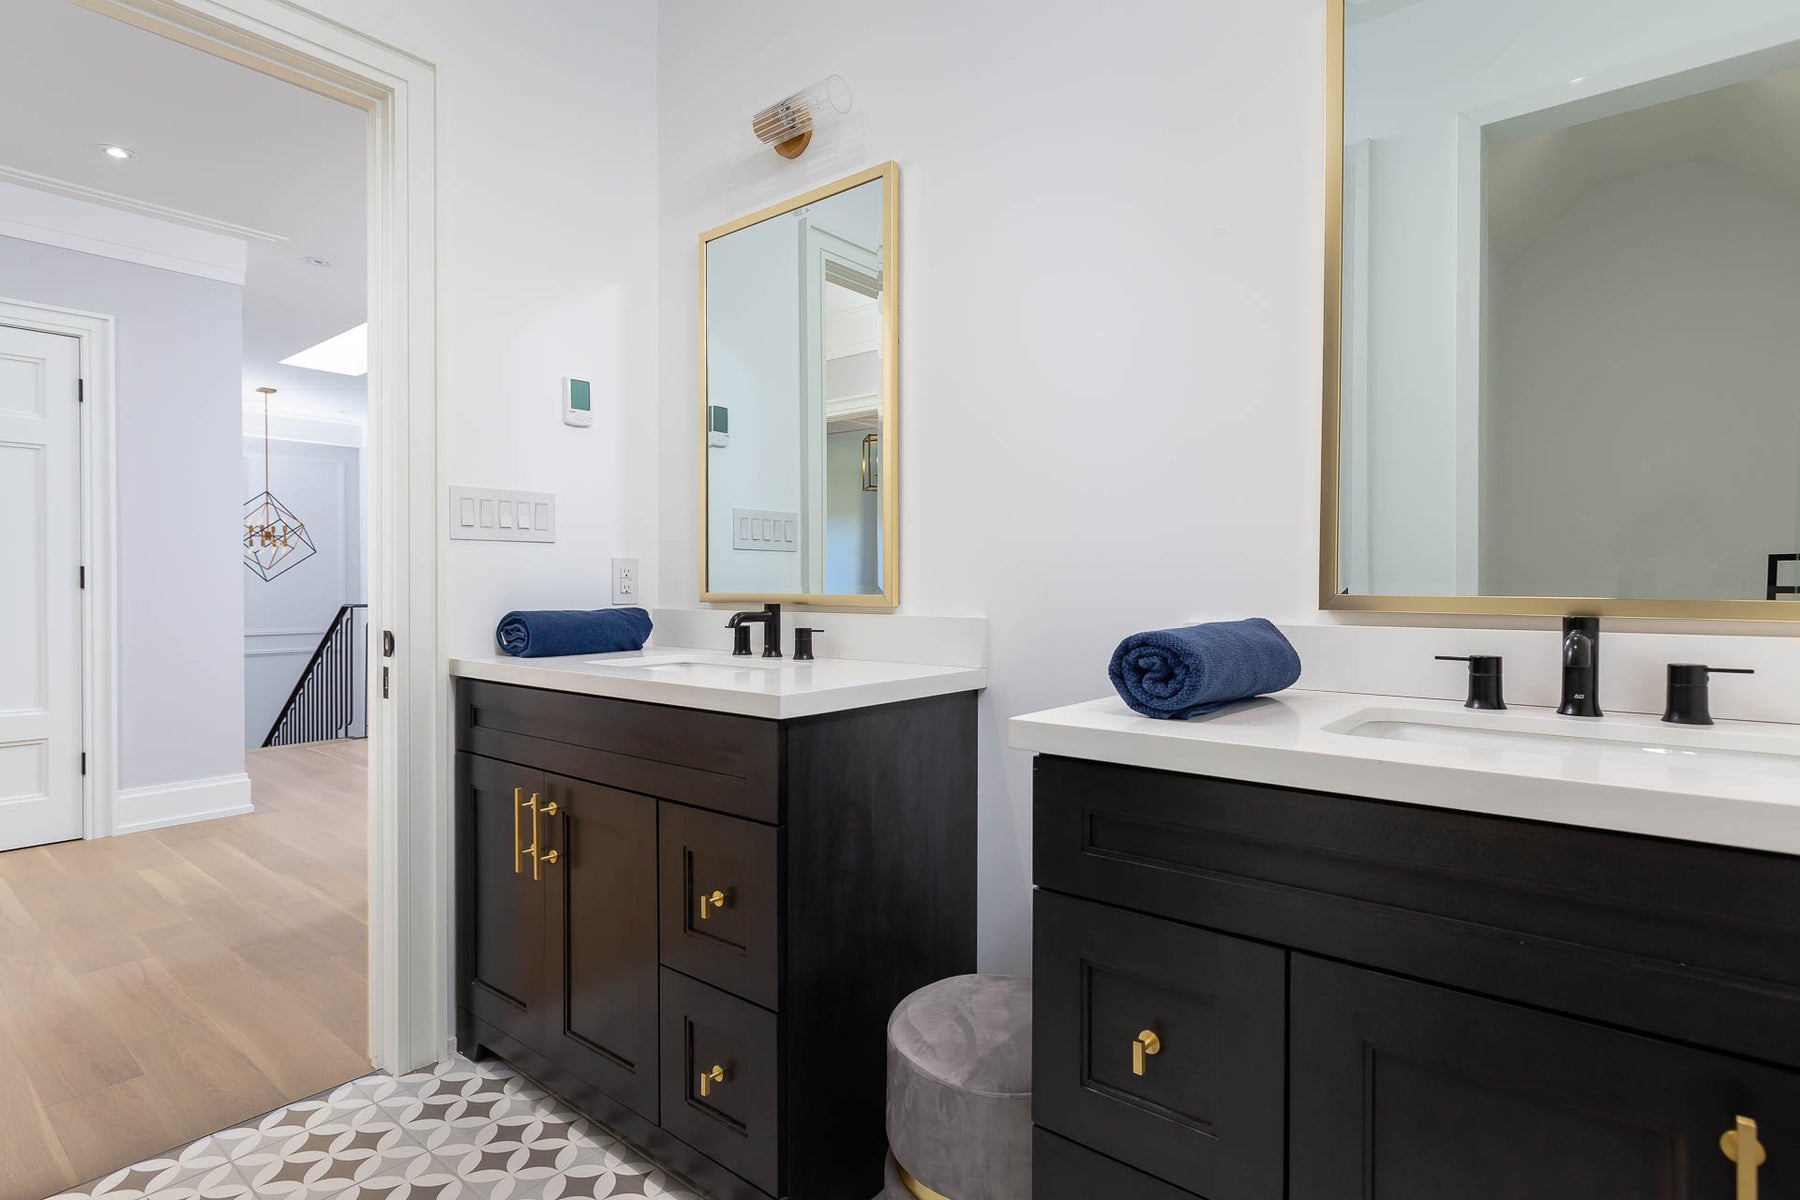 The Benefits of Quartz for Your Bathroom Vanity: Why Quartz Trumps Marble